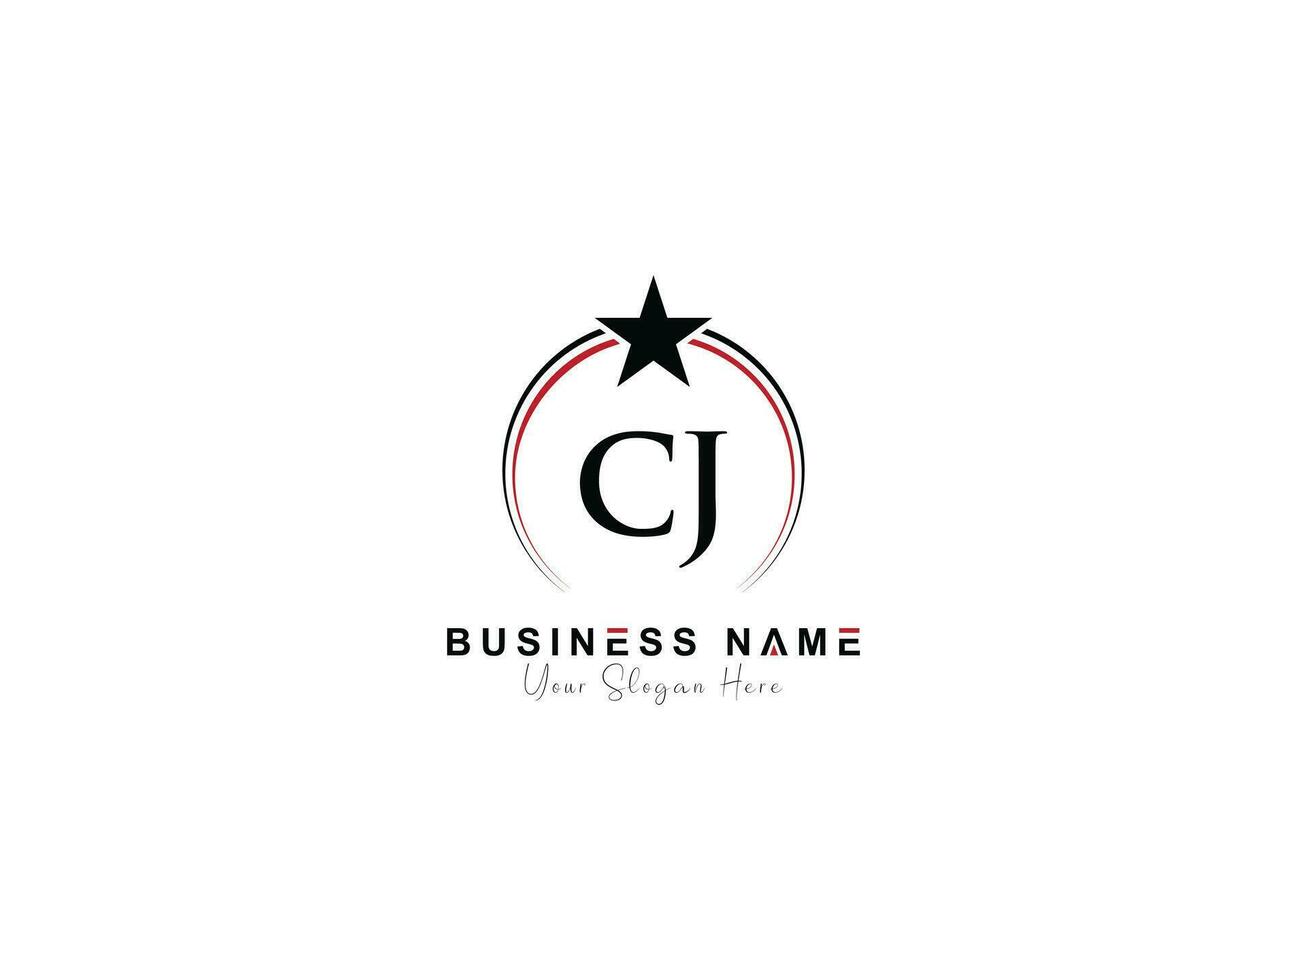 Minimal Star Cj Logo Icon, Creative Circle Luxury CJ Letter Logo Image Design vector